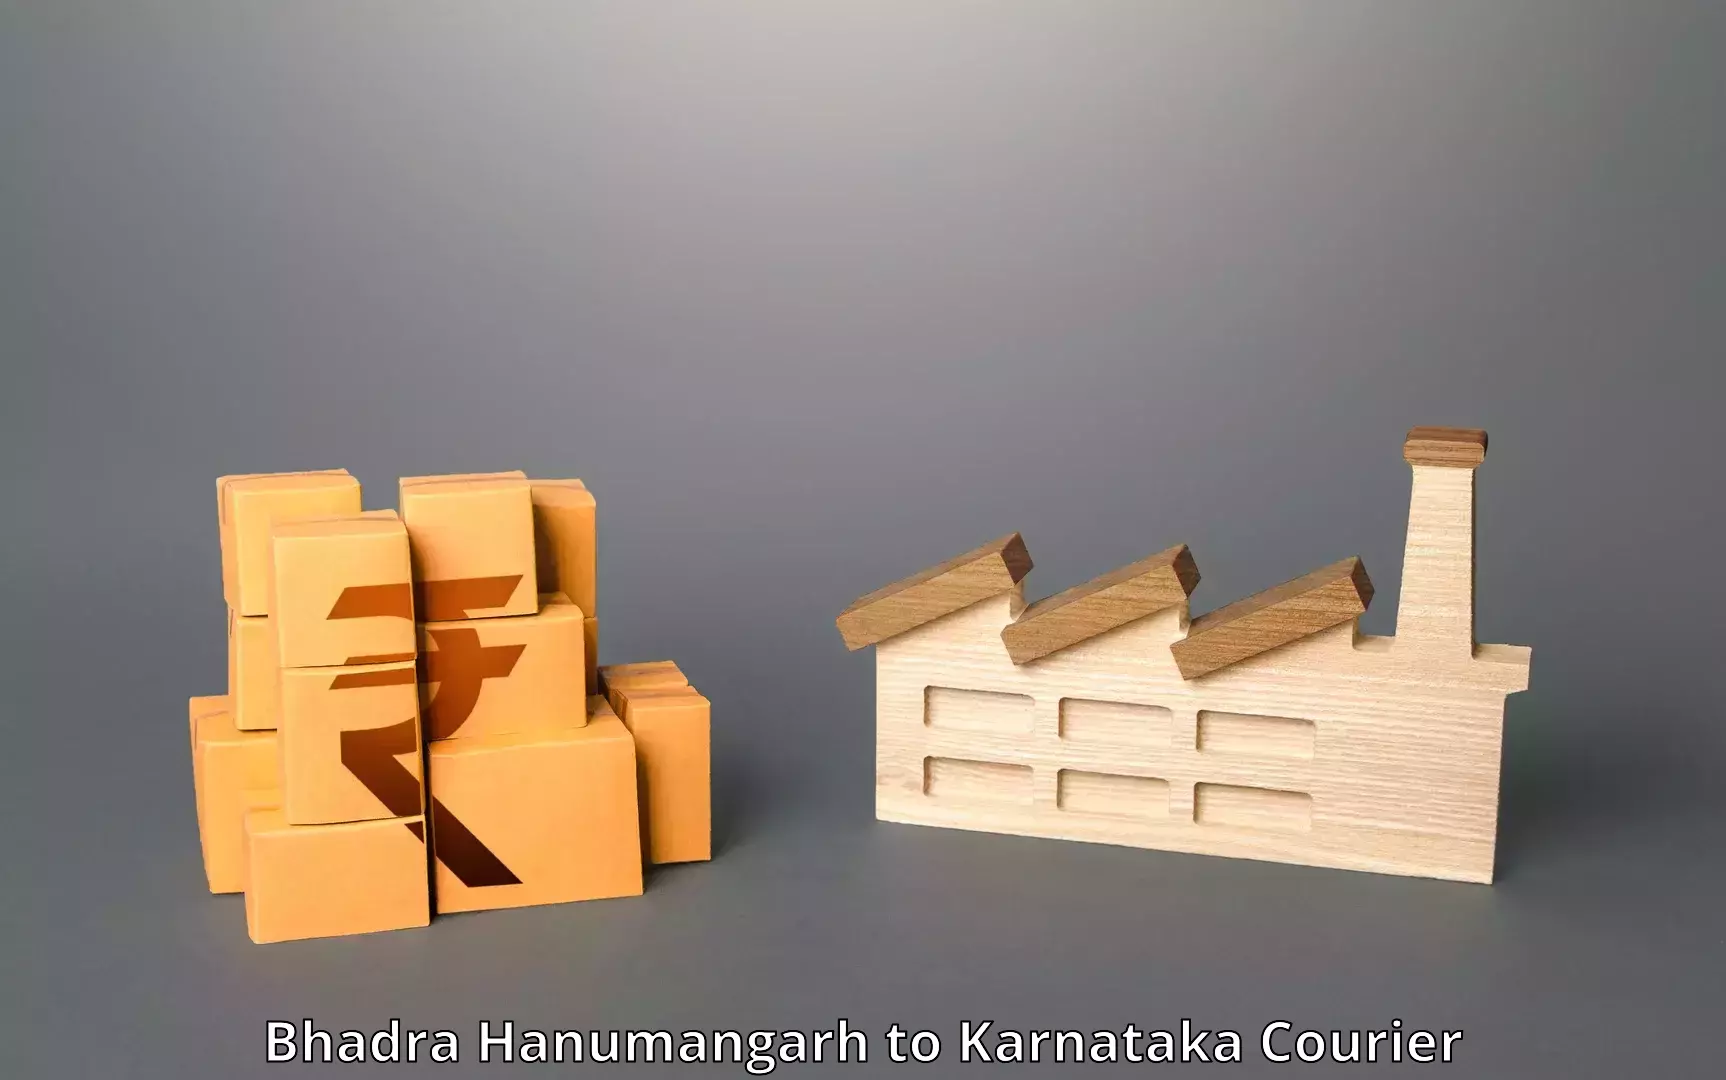 Courier service booking Bhadra Hanumangarh to Karnataka